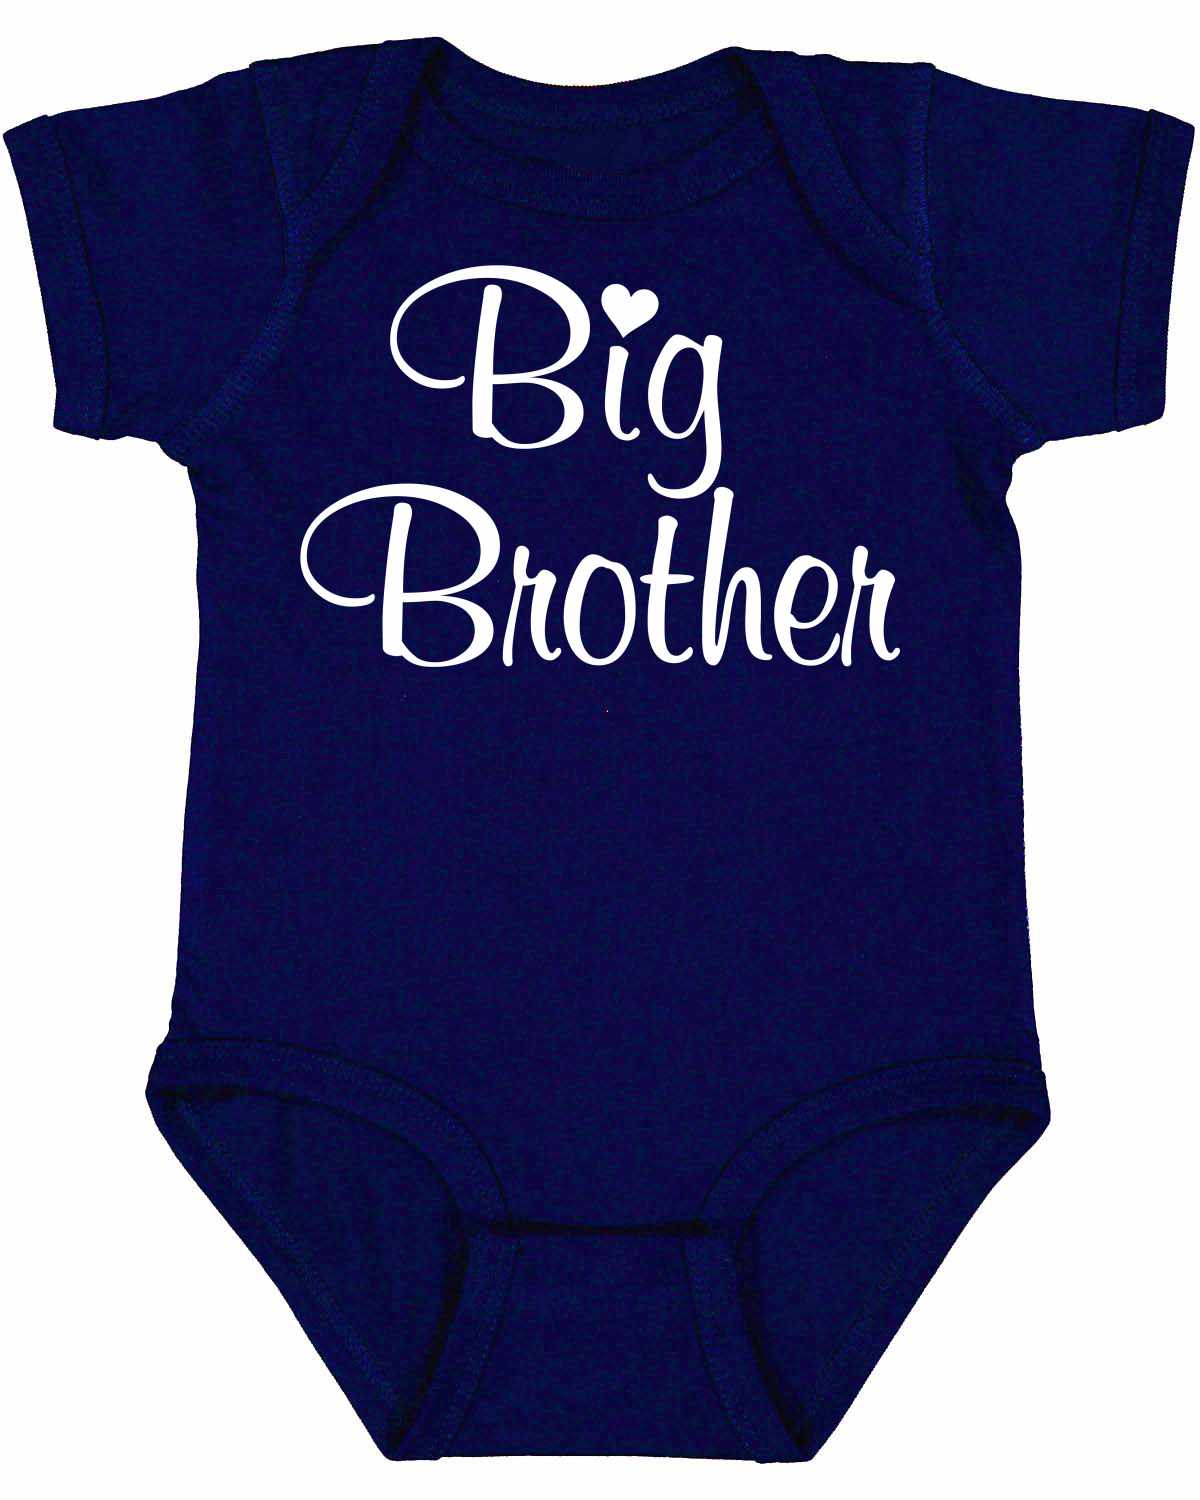 Big Brother on Infant BodySuit (#1344-10)